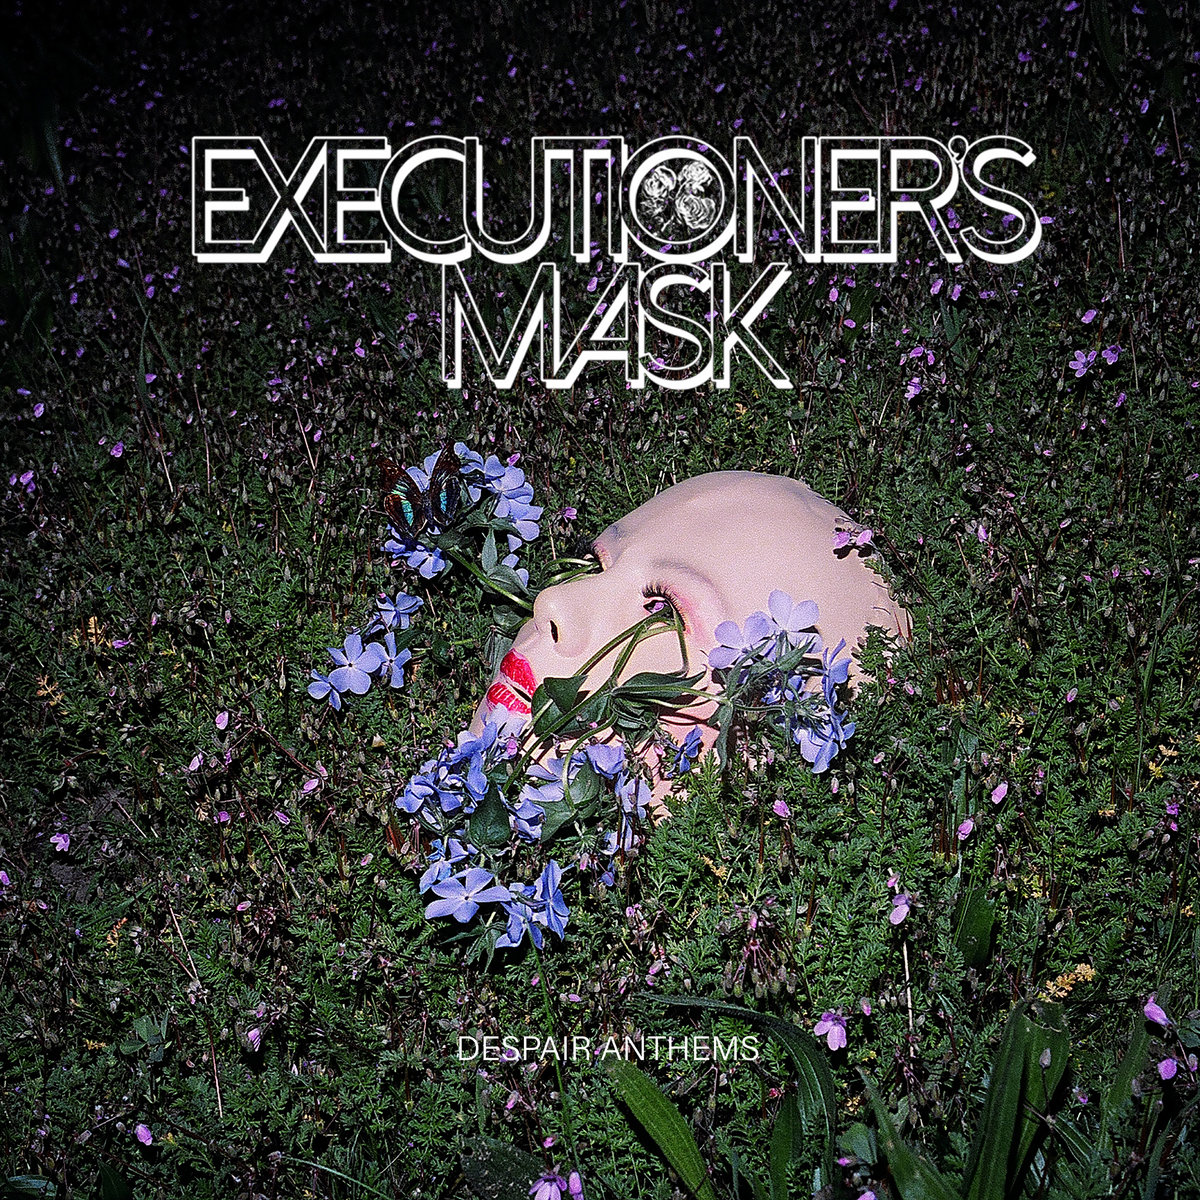 Executioner’s Mask, “Despair Anthems”